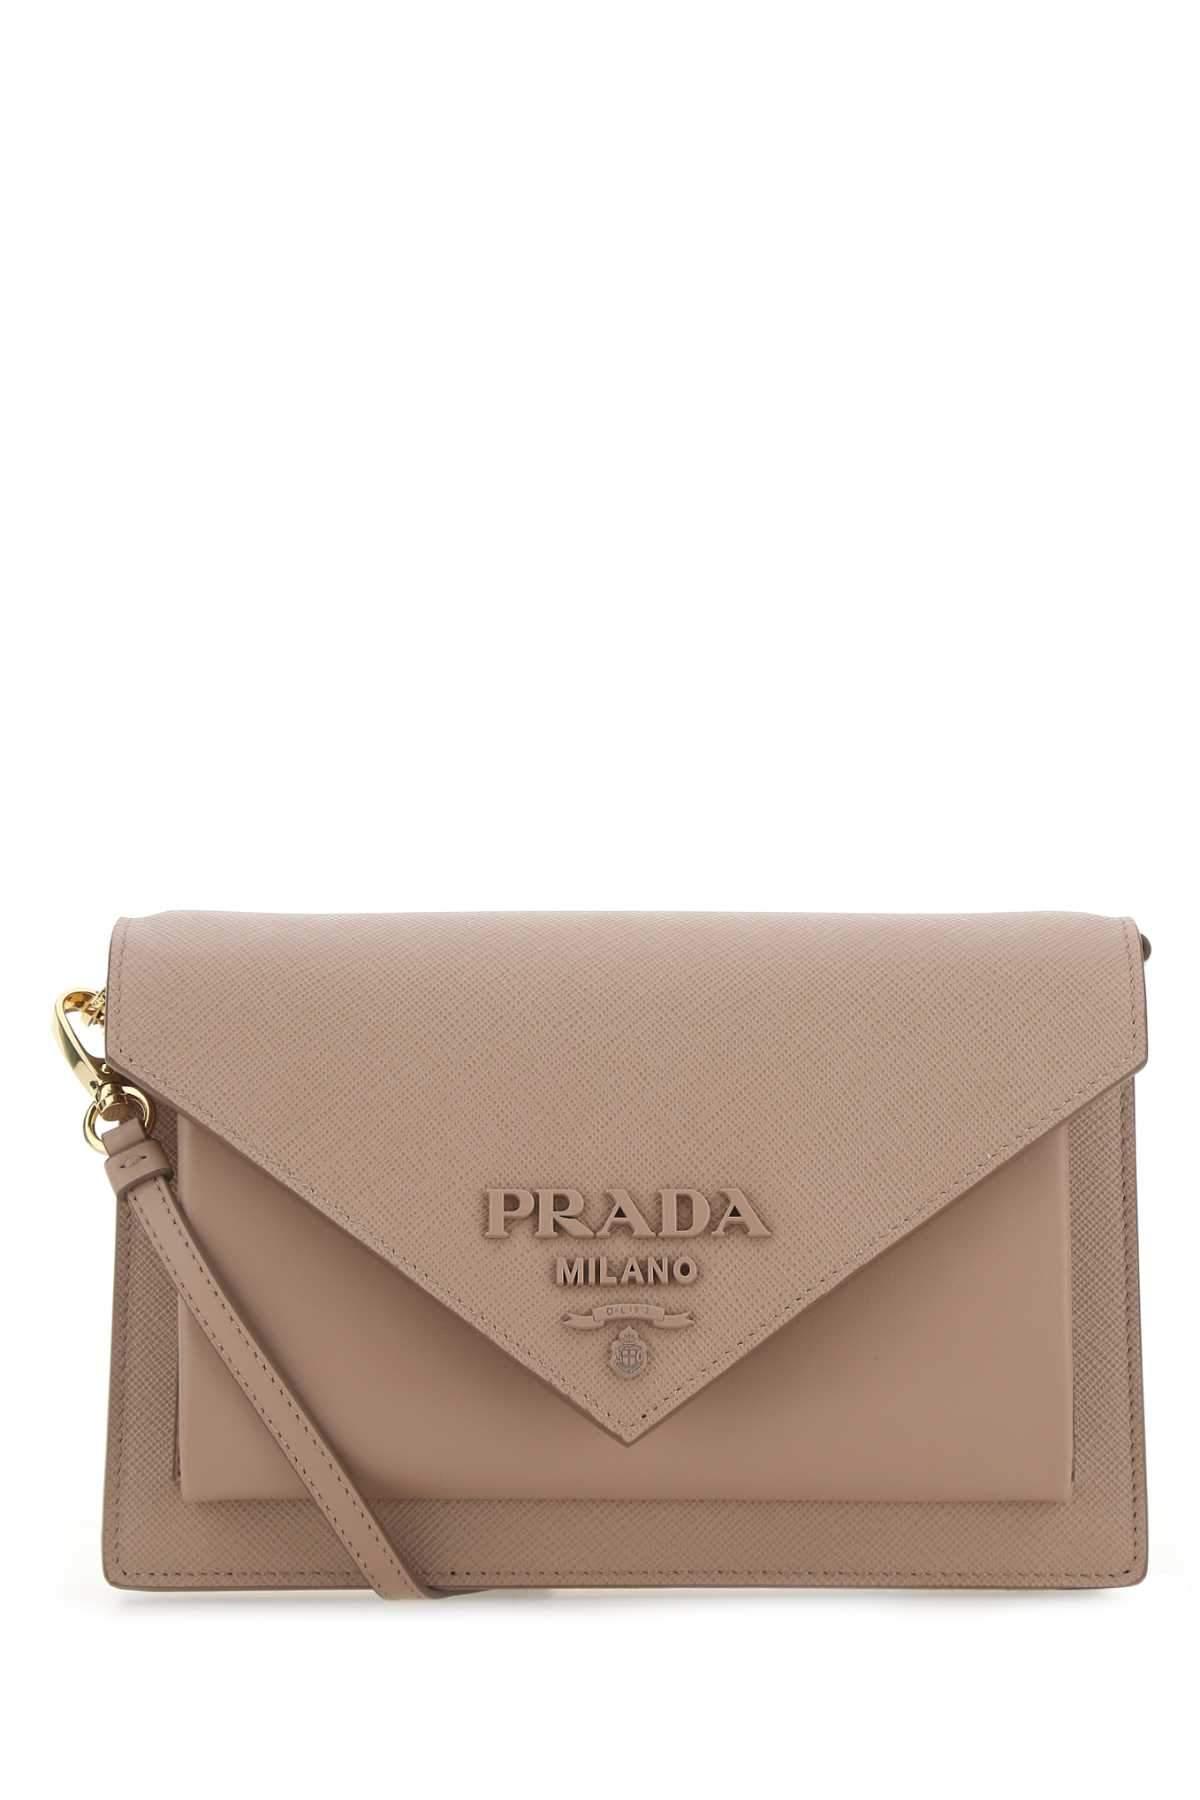 PRADA Crossbody Bags & Handbags for Women